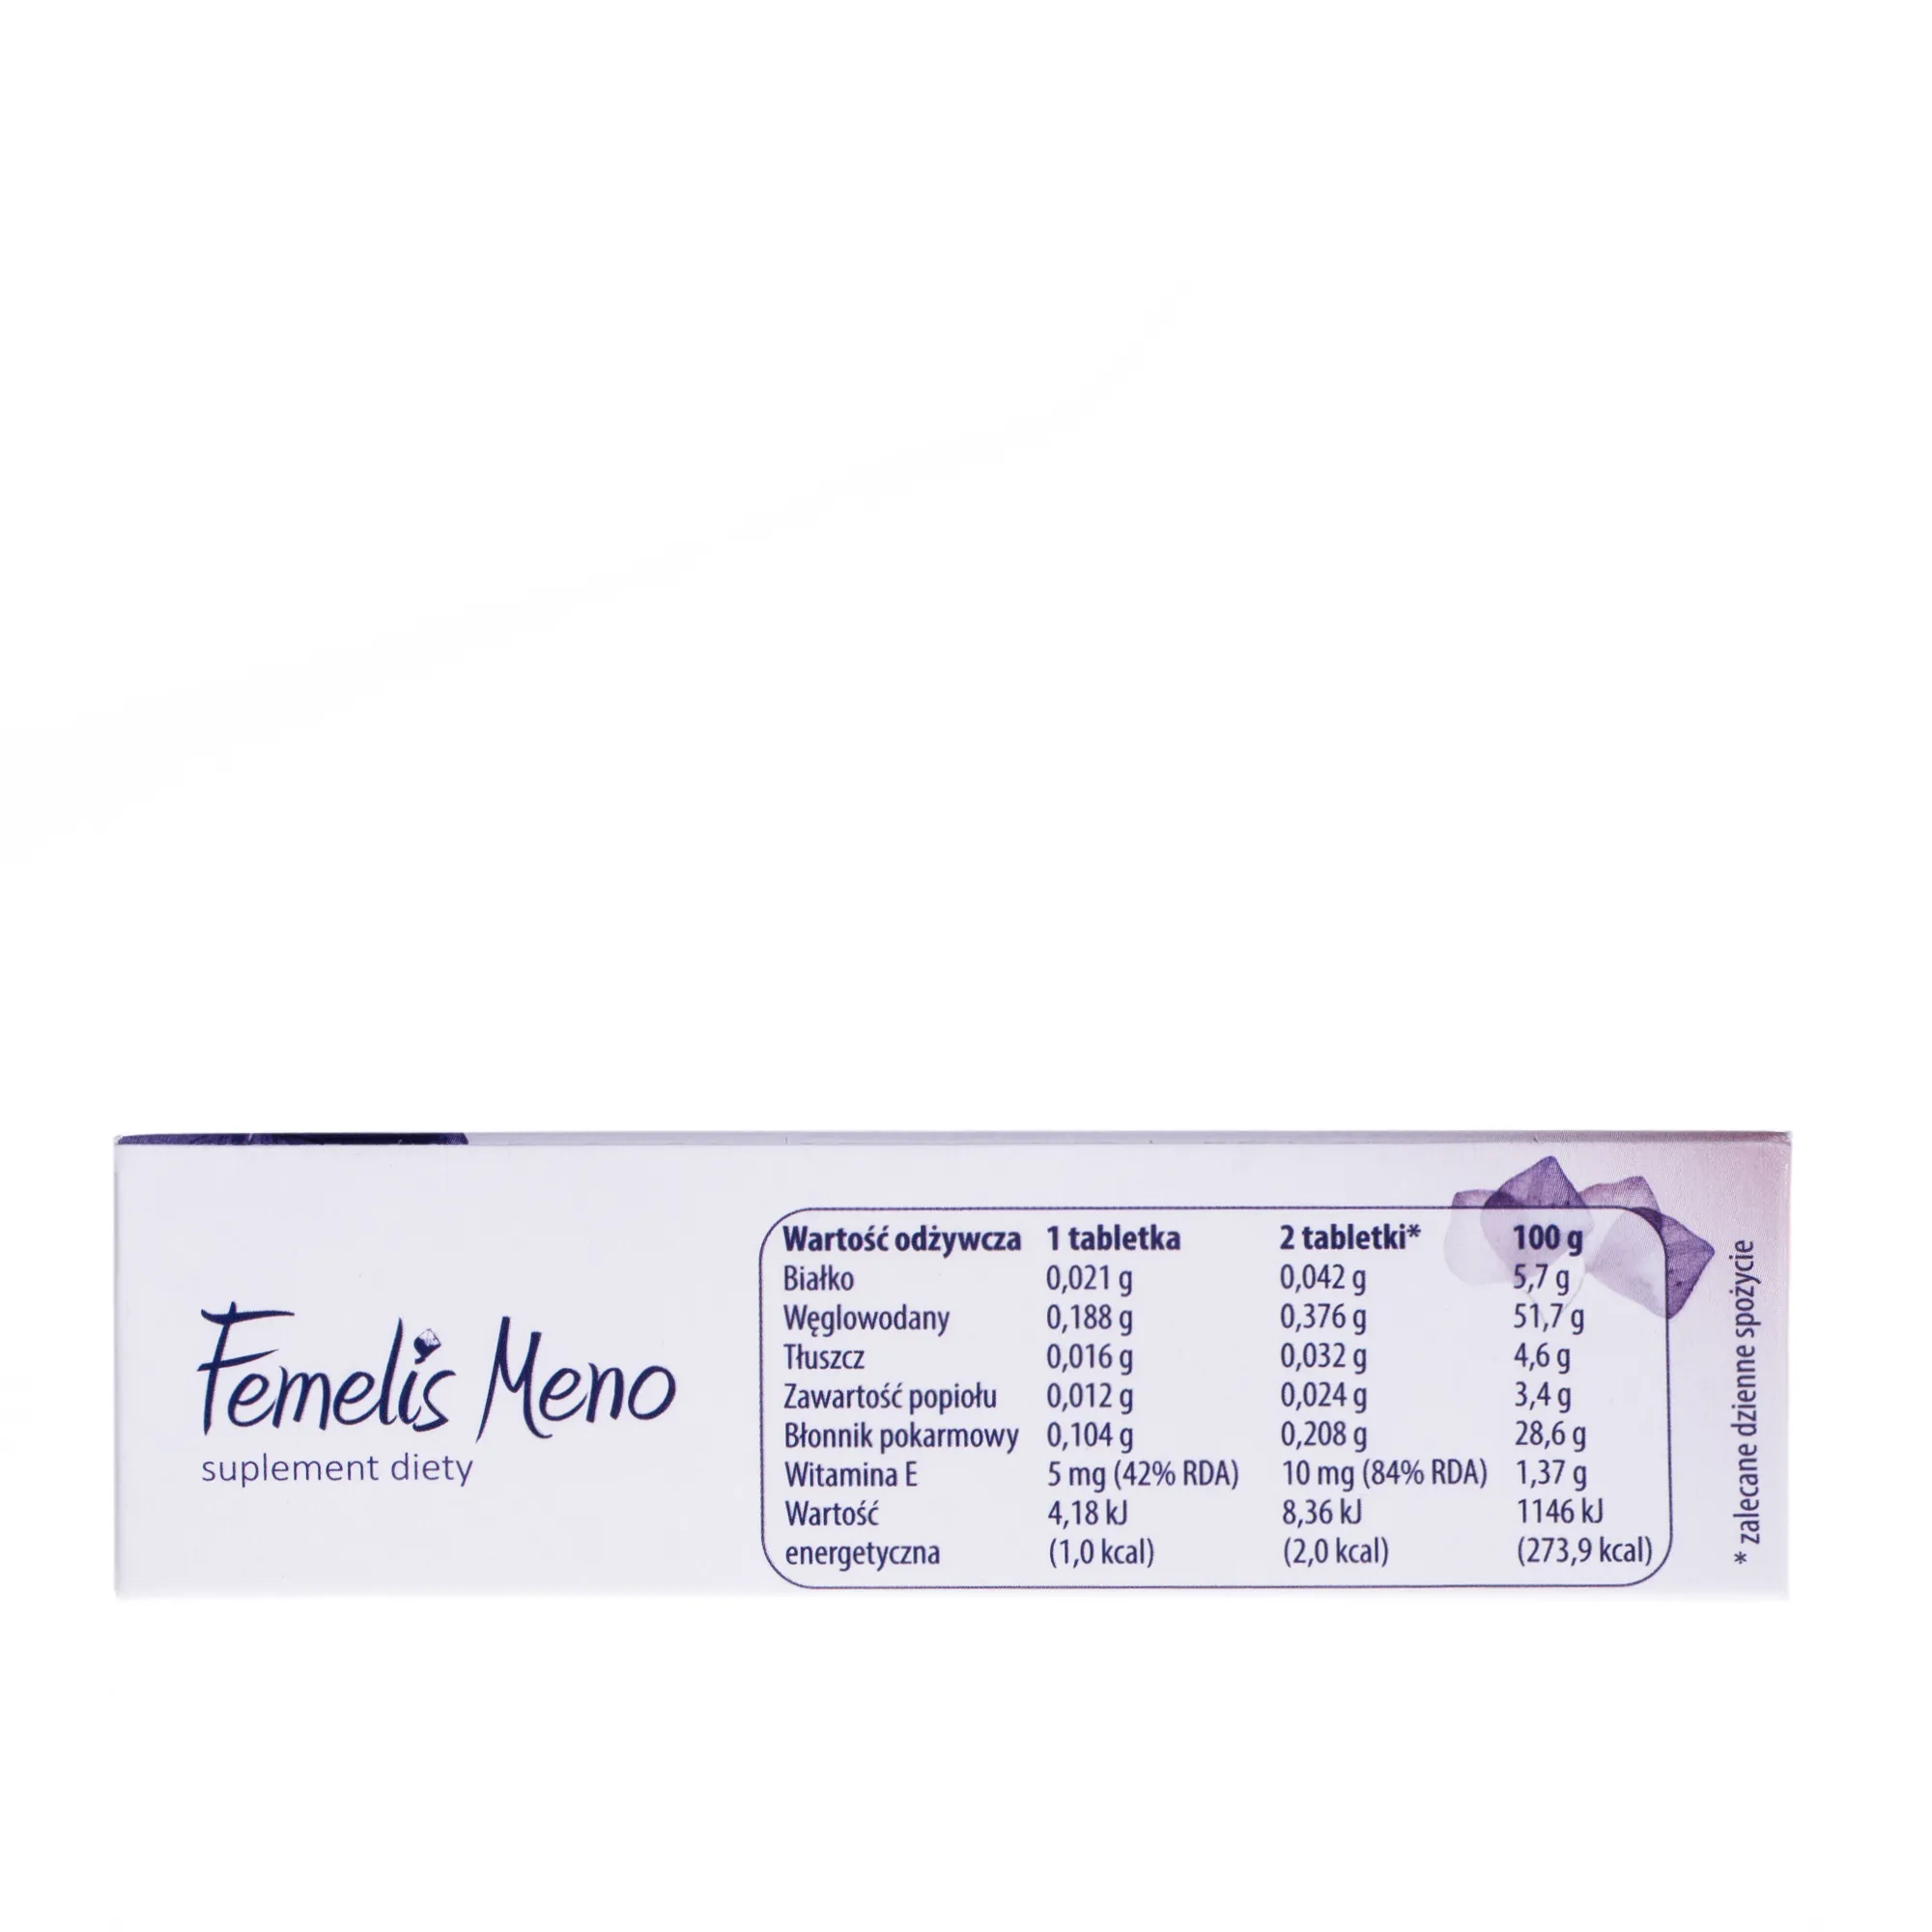 Femelis Meno, suplement diety, 60 tabletek 